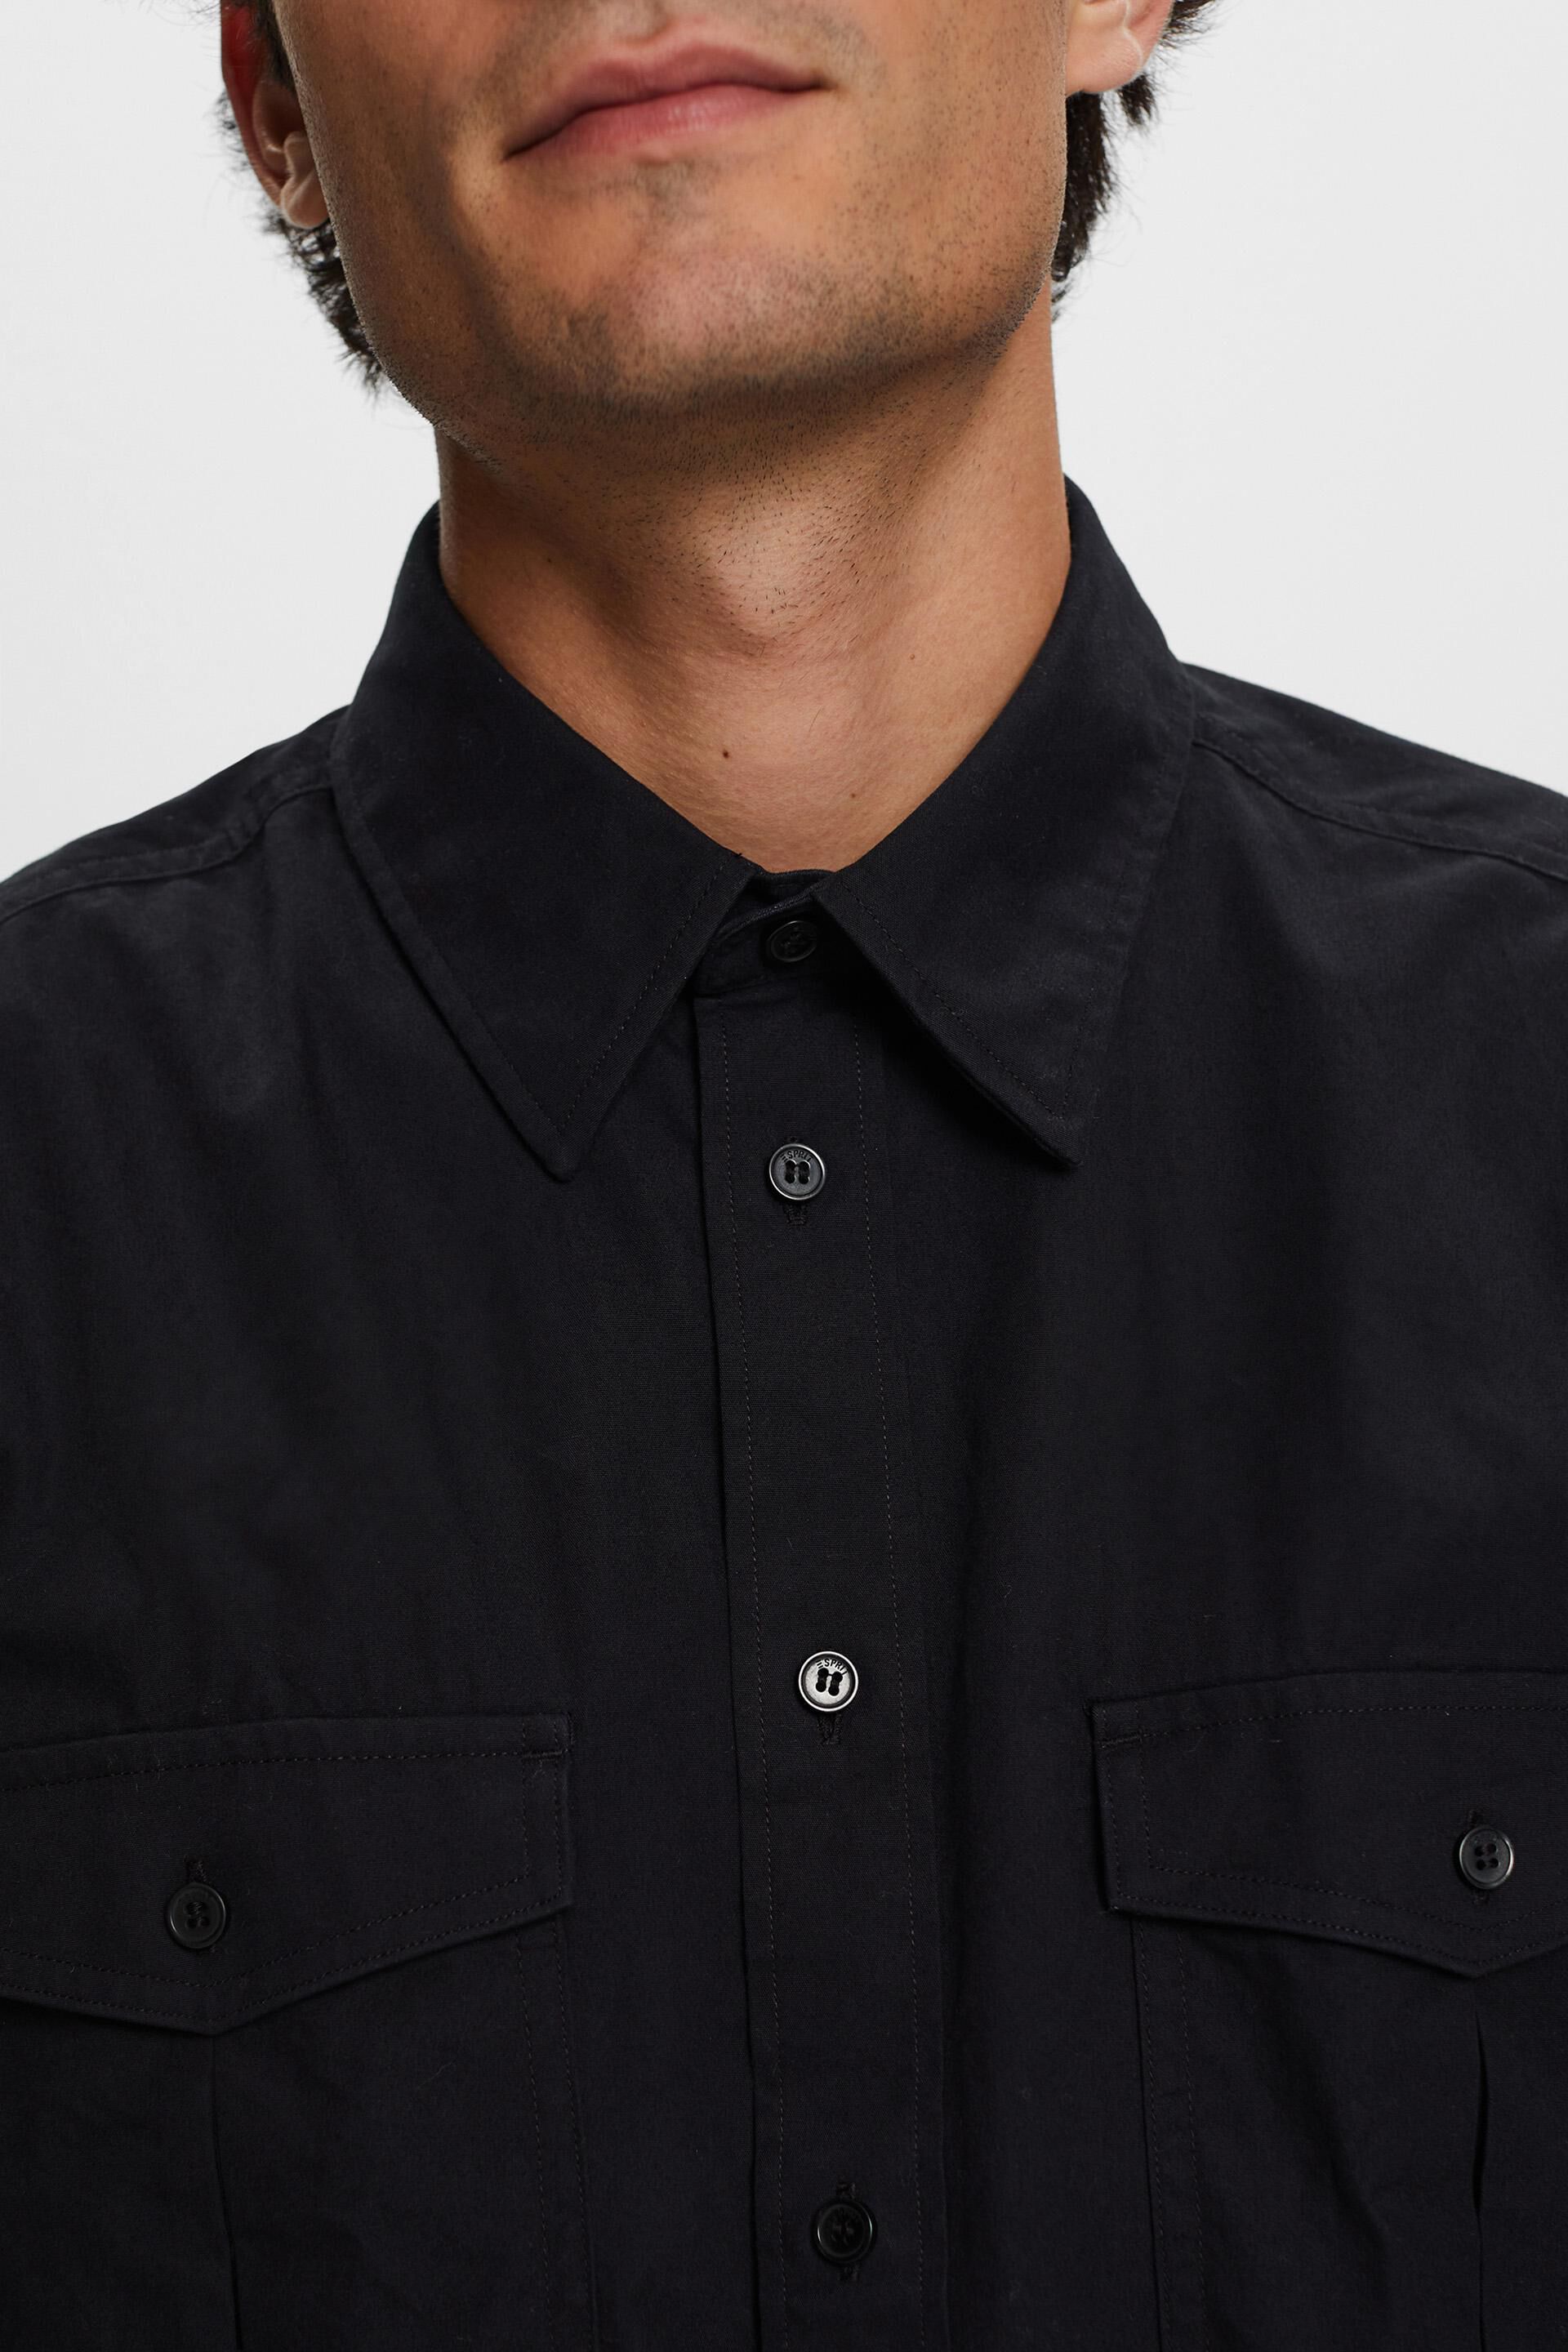 Esprit Utility-Shirt, % 100 Baumwolle